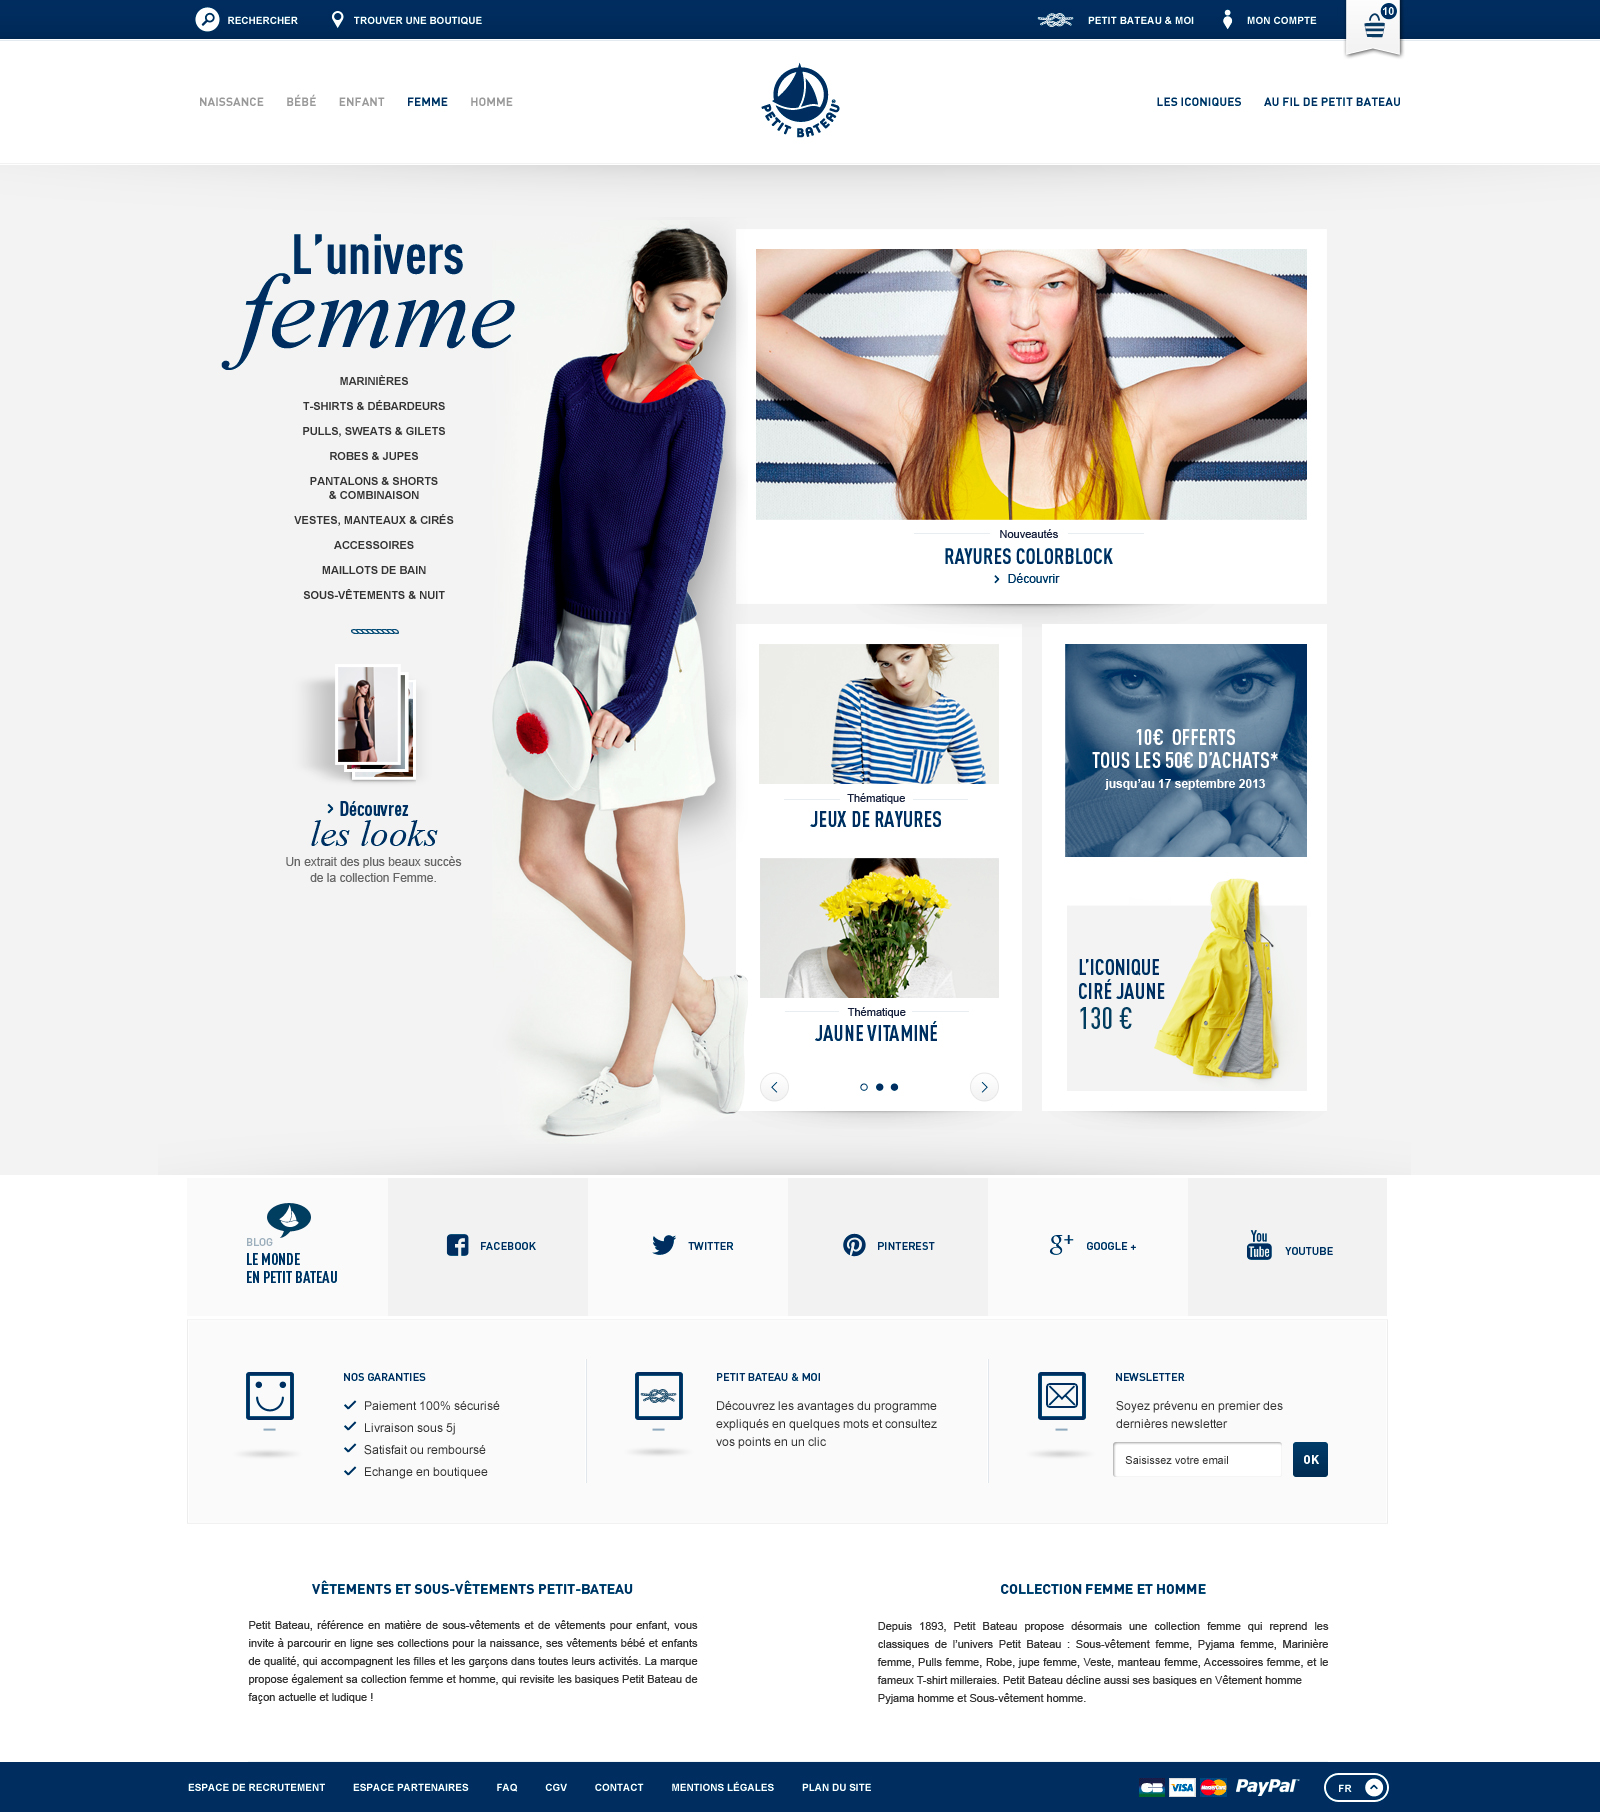 Petit Bateau website redesign by altima° - Creative Work - $i